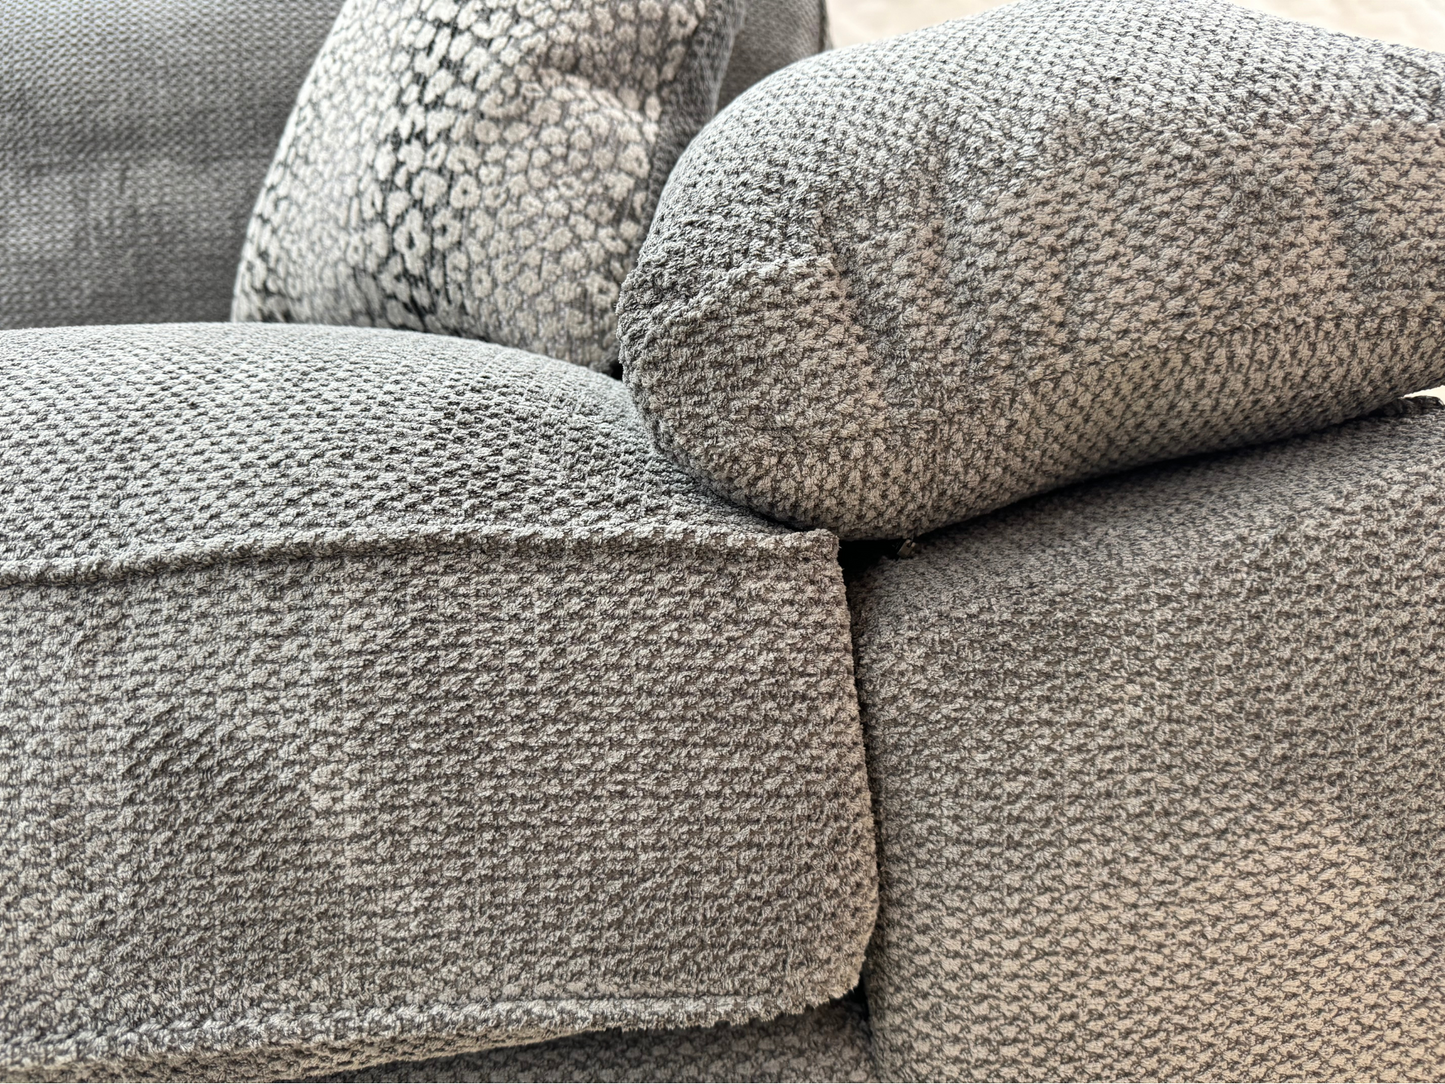 Dexter Ex-Display Large Grey Fabric Corner Sofa | EXDEX